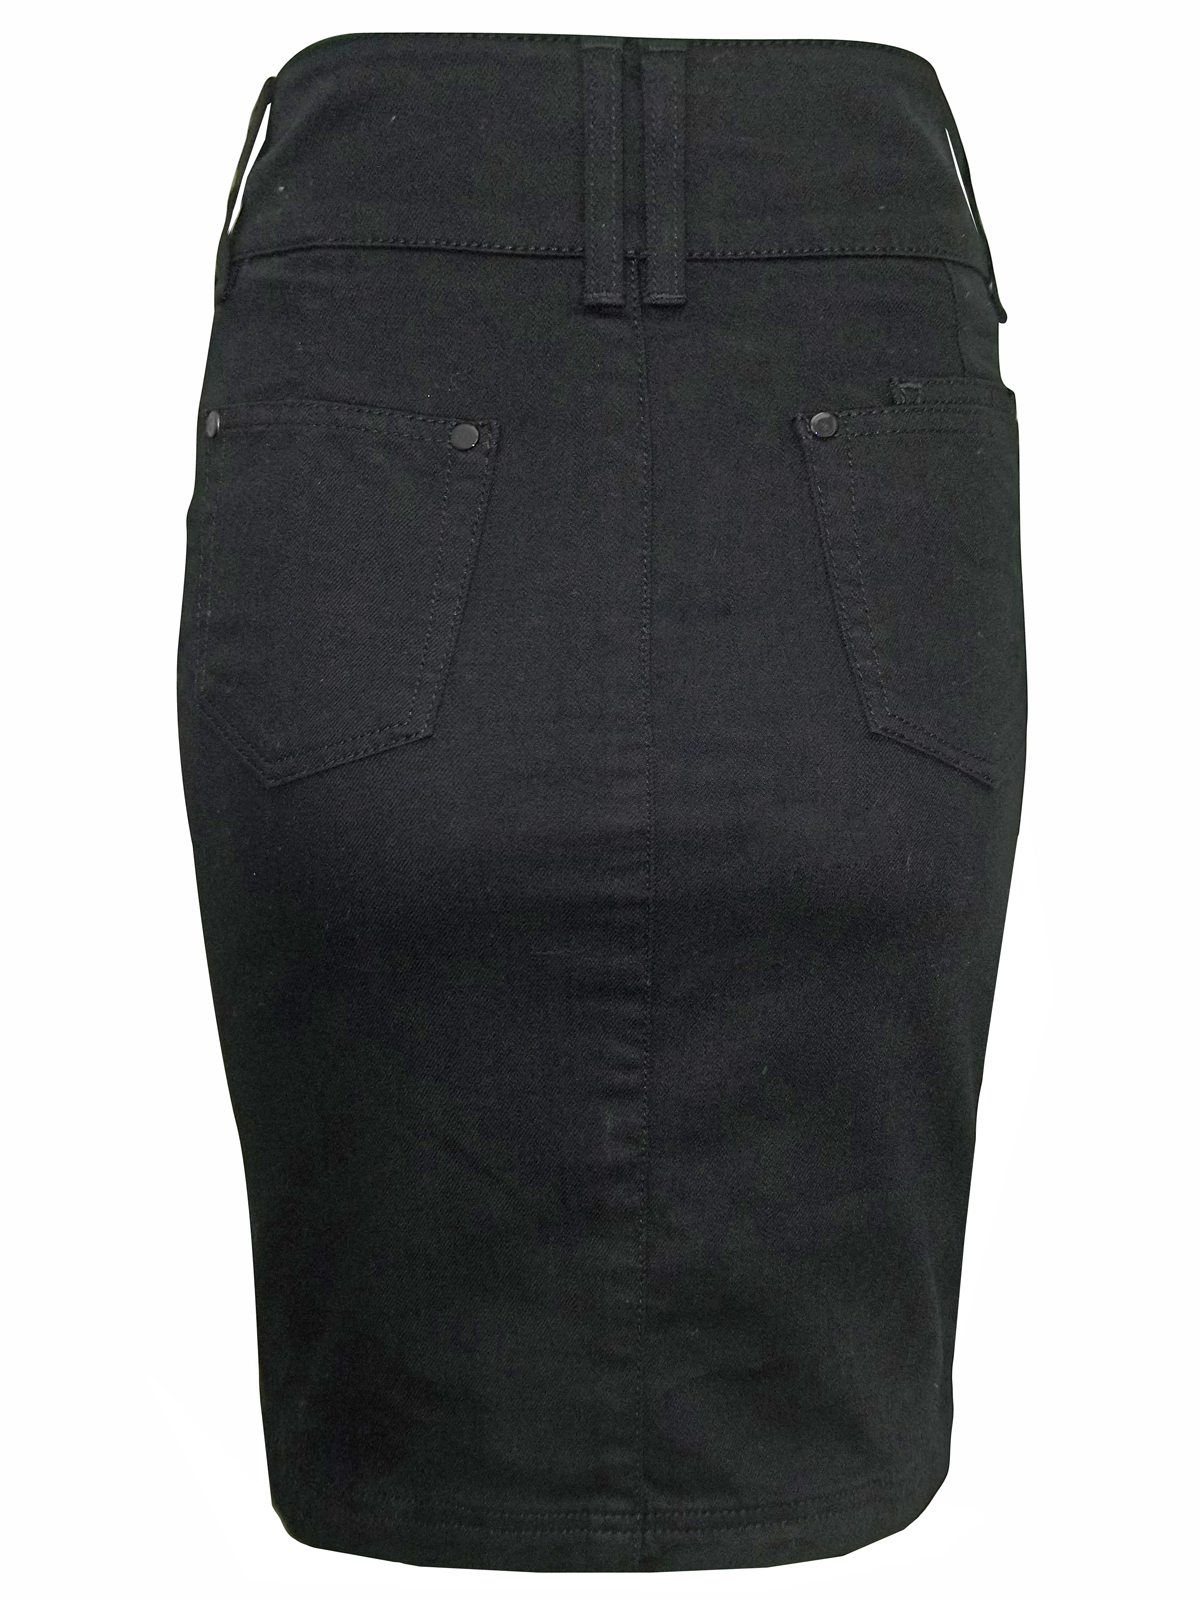 Marks and Spencer - - M&5 Black Denim High Waist Zip Front Skirt - Size ...